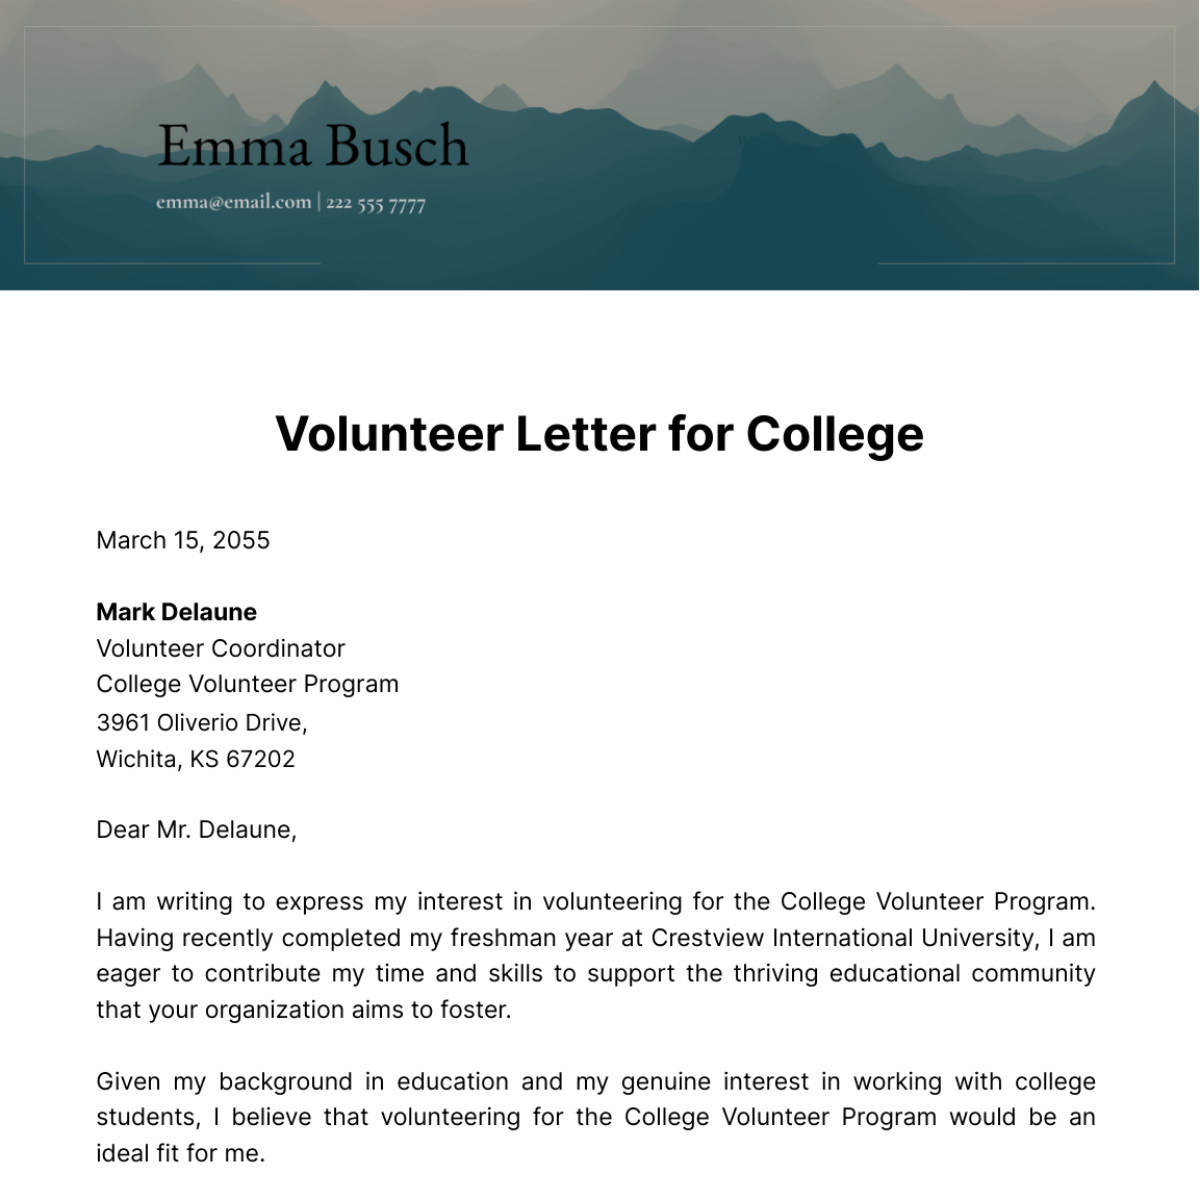 Volunteer Letter for College Template